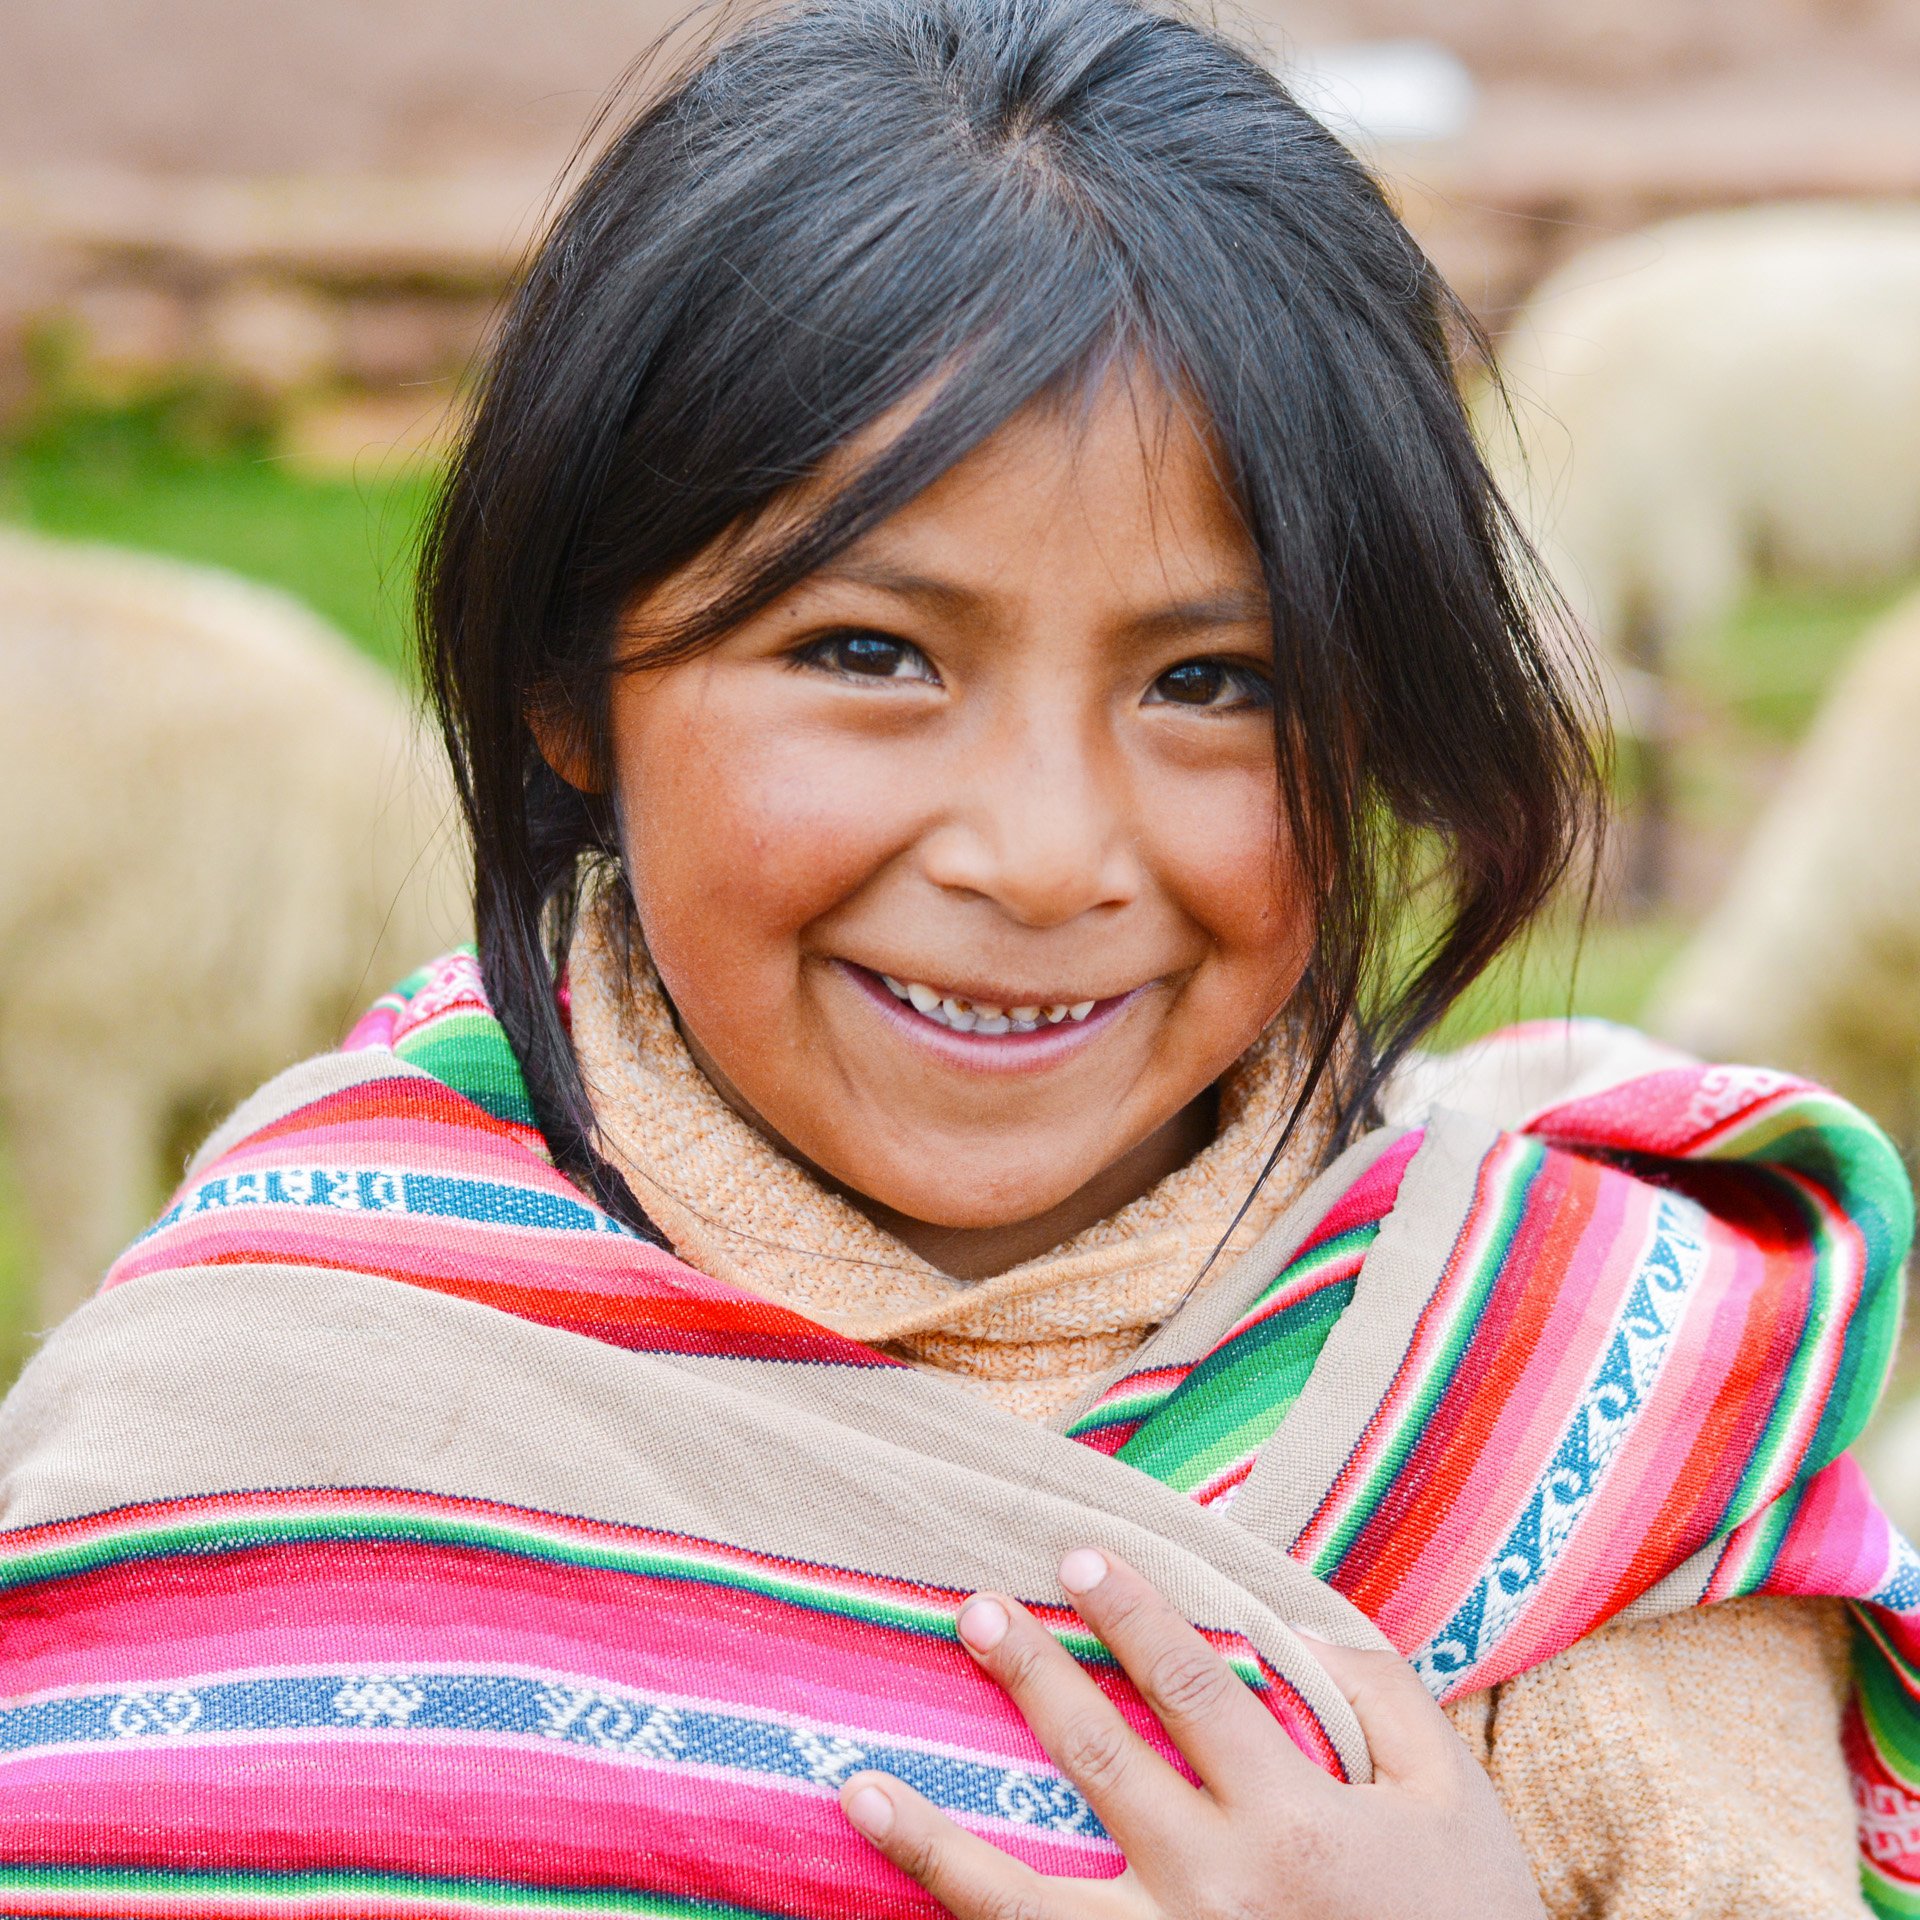 immerse yourself in the local Peruvian culture